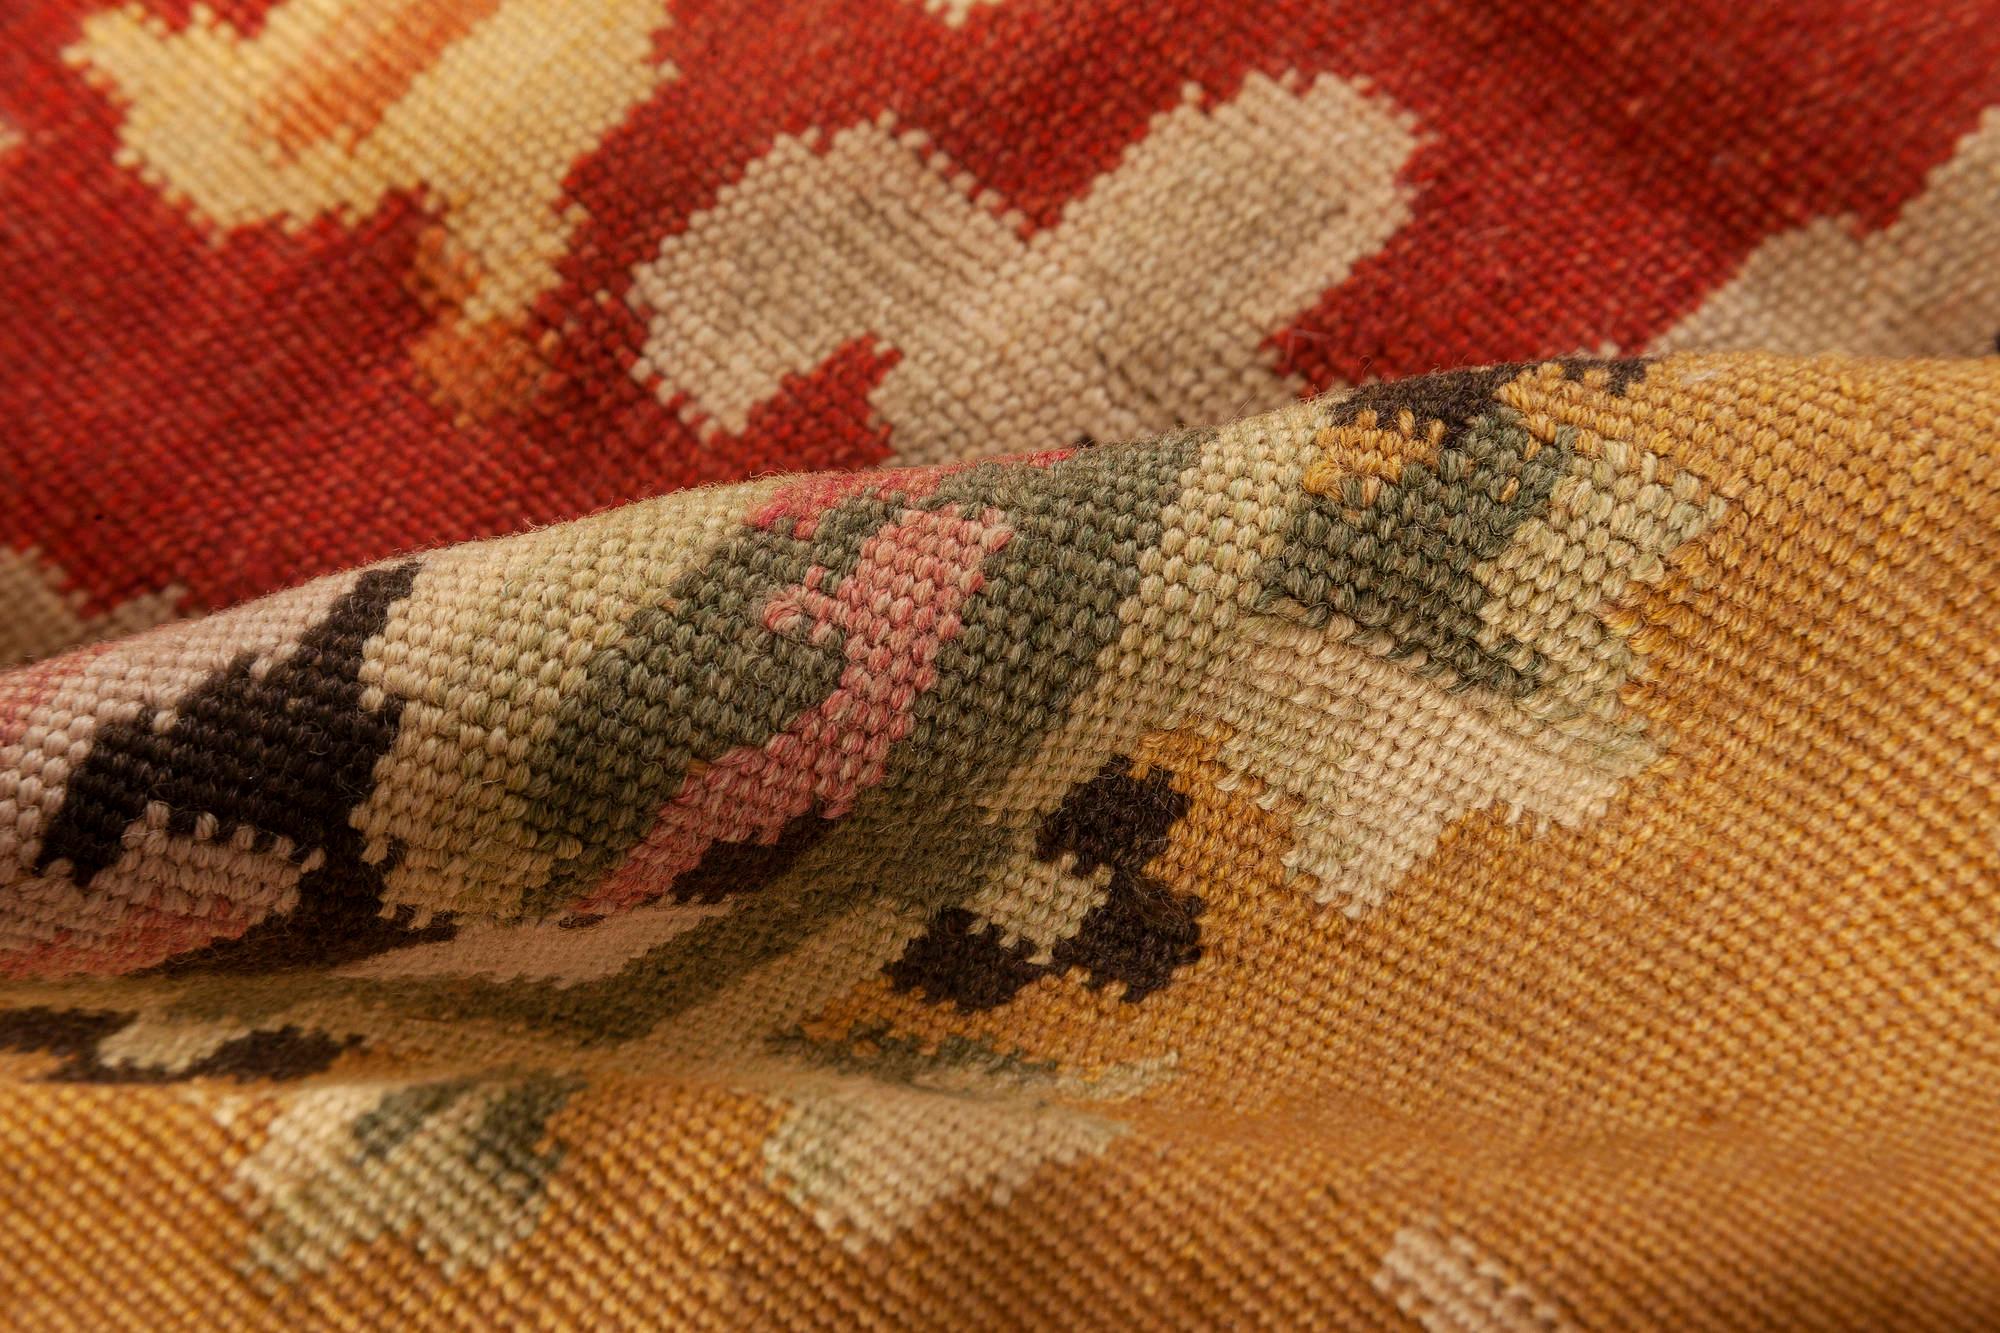 Contemporary Bessarabian floral design wool rug by Doris Leslie Blau.
Size: 12'0